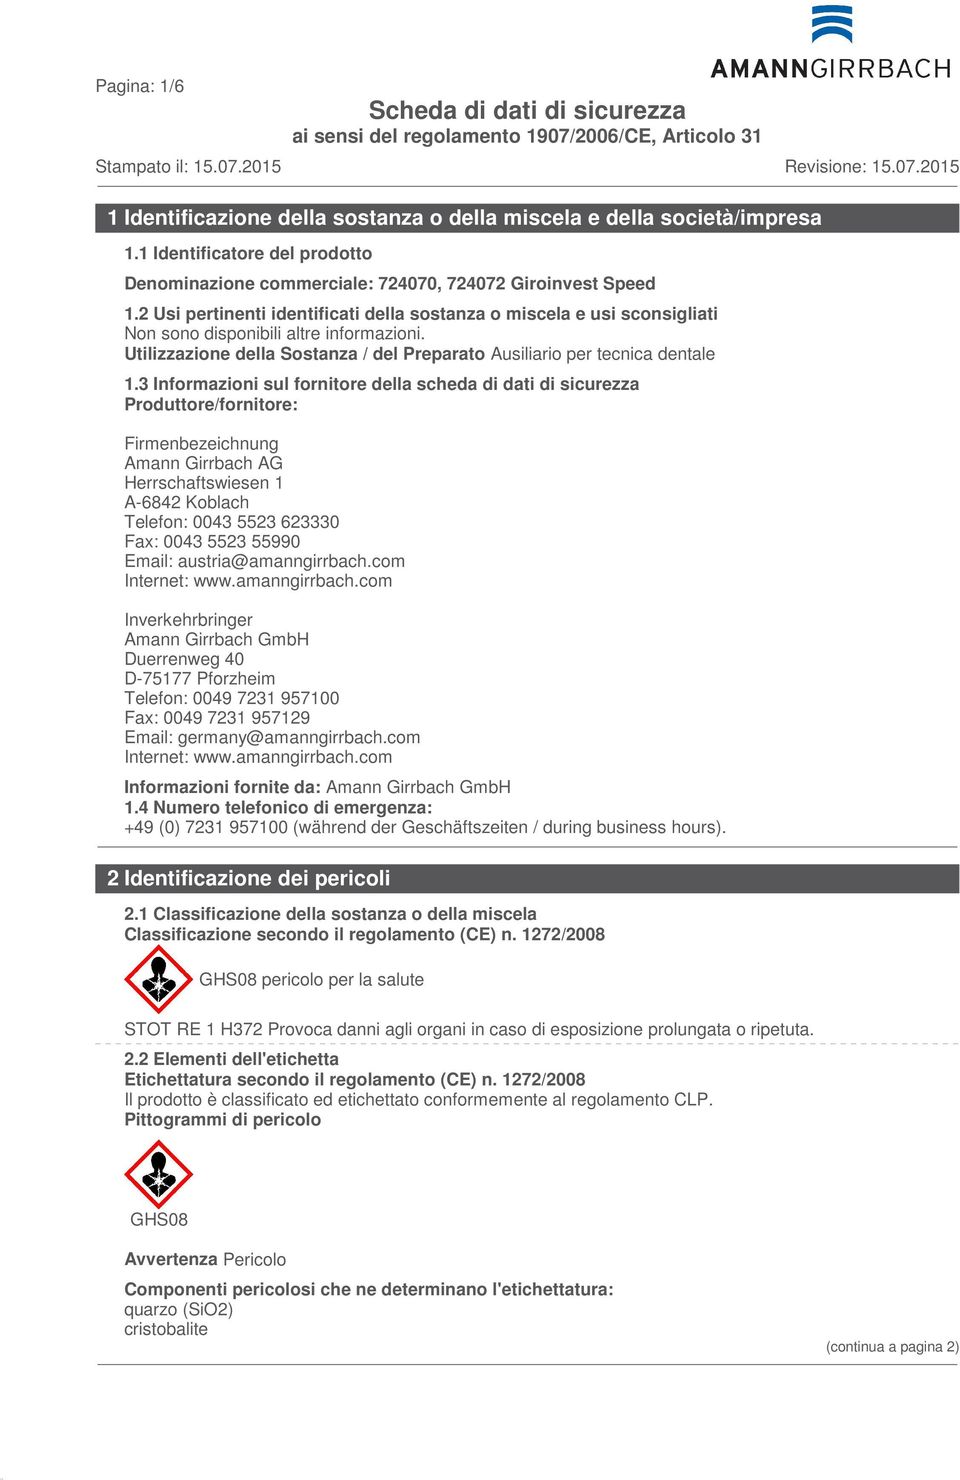 3 Informazioni sul fornitore della scheda di dati di sicurezza Produttore/fornitore: Firmenbezeichnung Amann Girrbach AG Herrschaftswiesen 1 A-6842 Koblach Telefon: 0043 5523 623330 Fax: 0043 5523